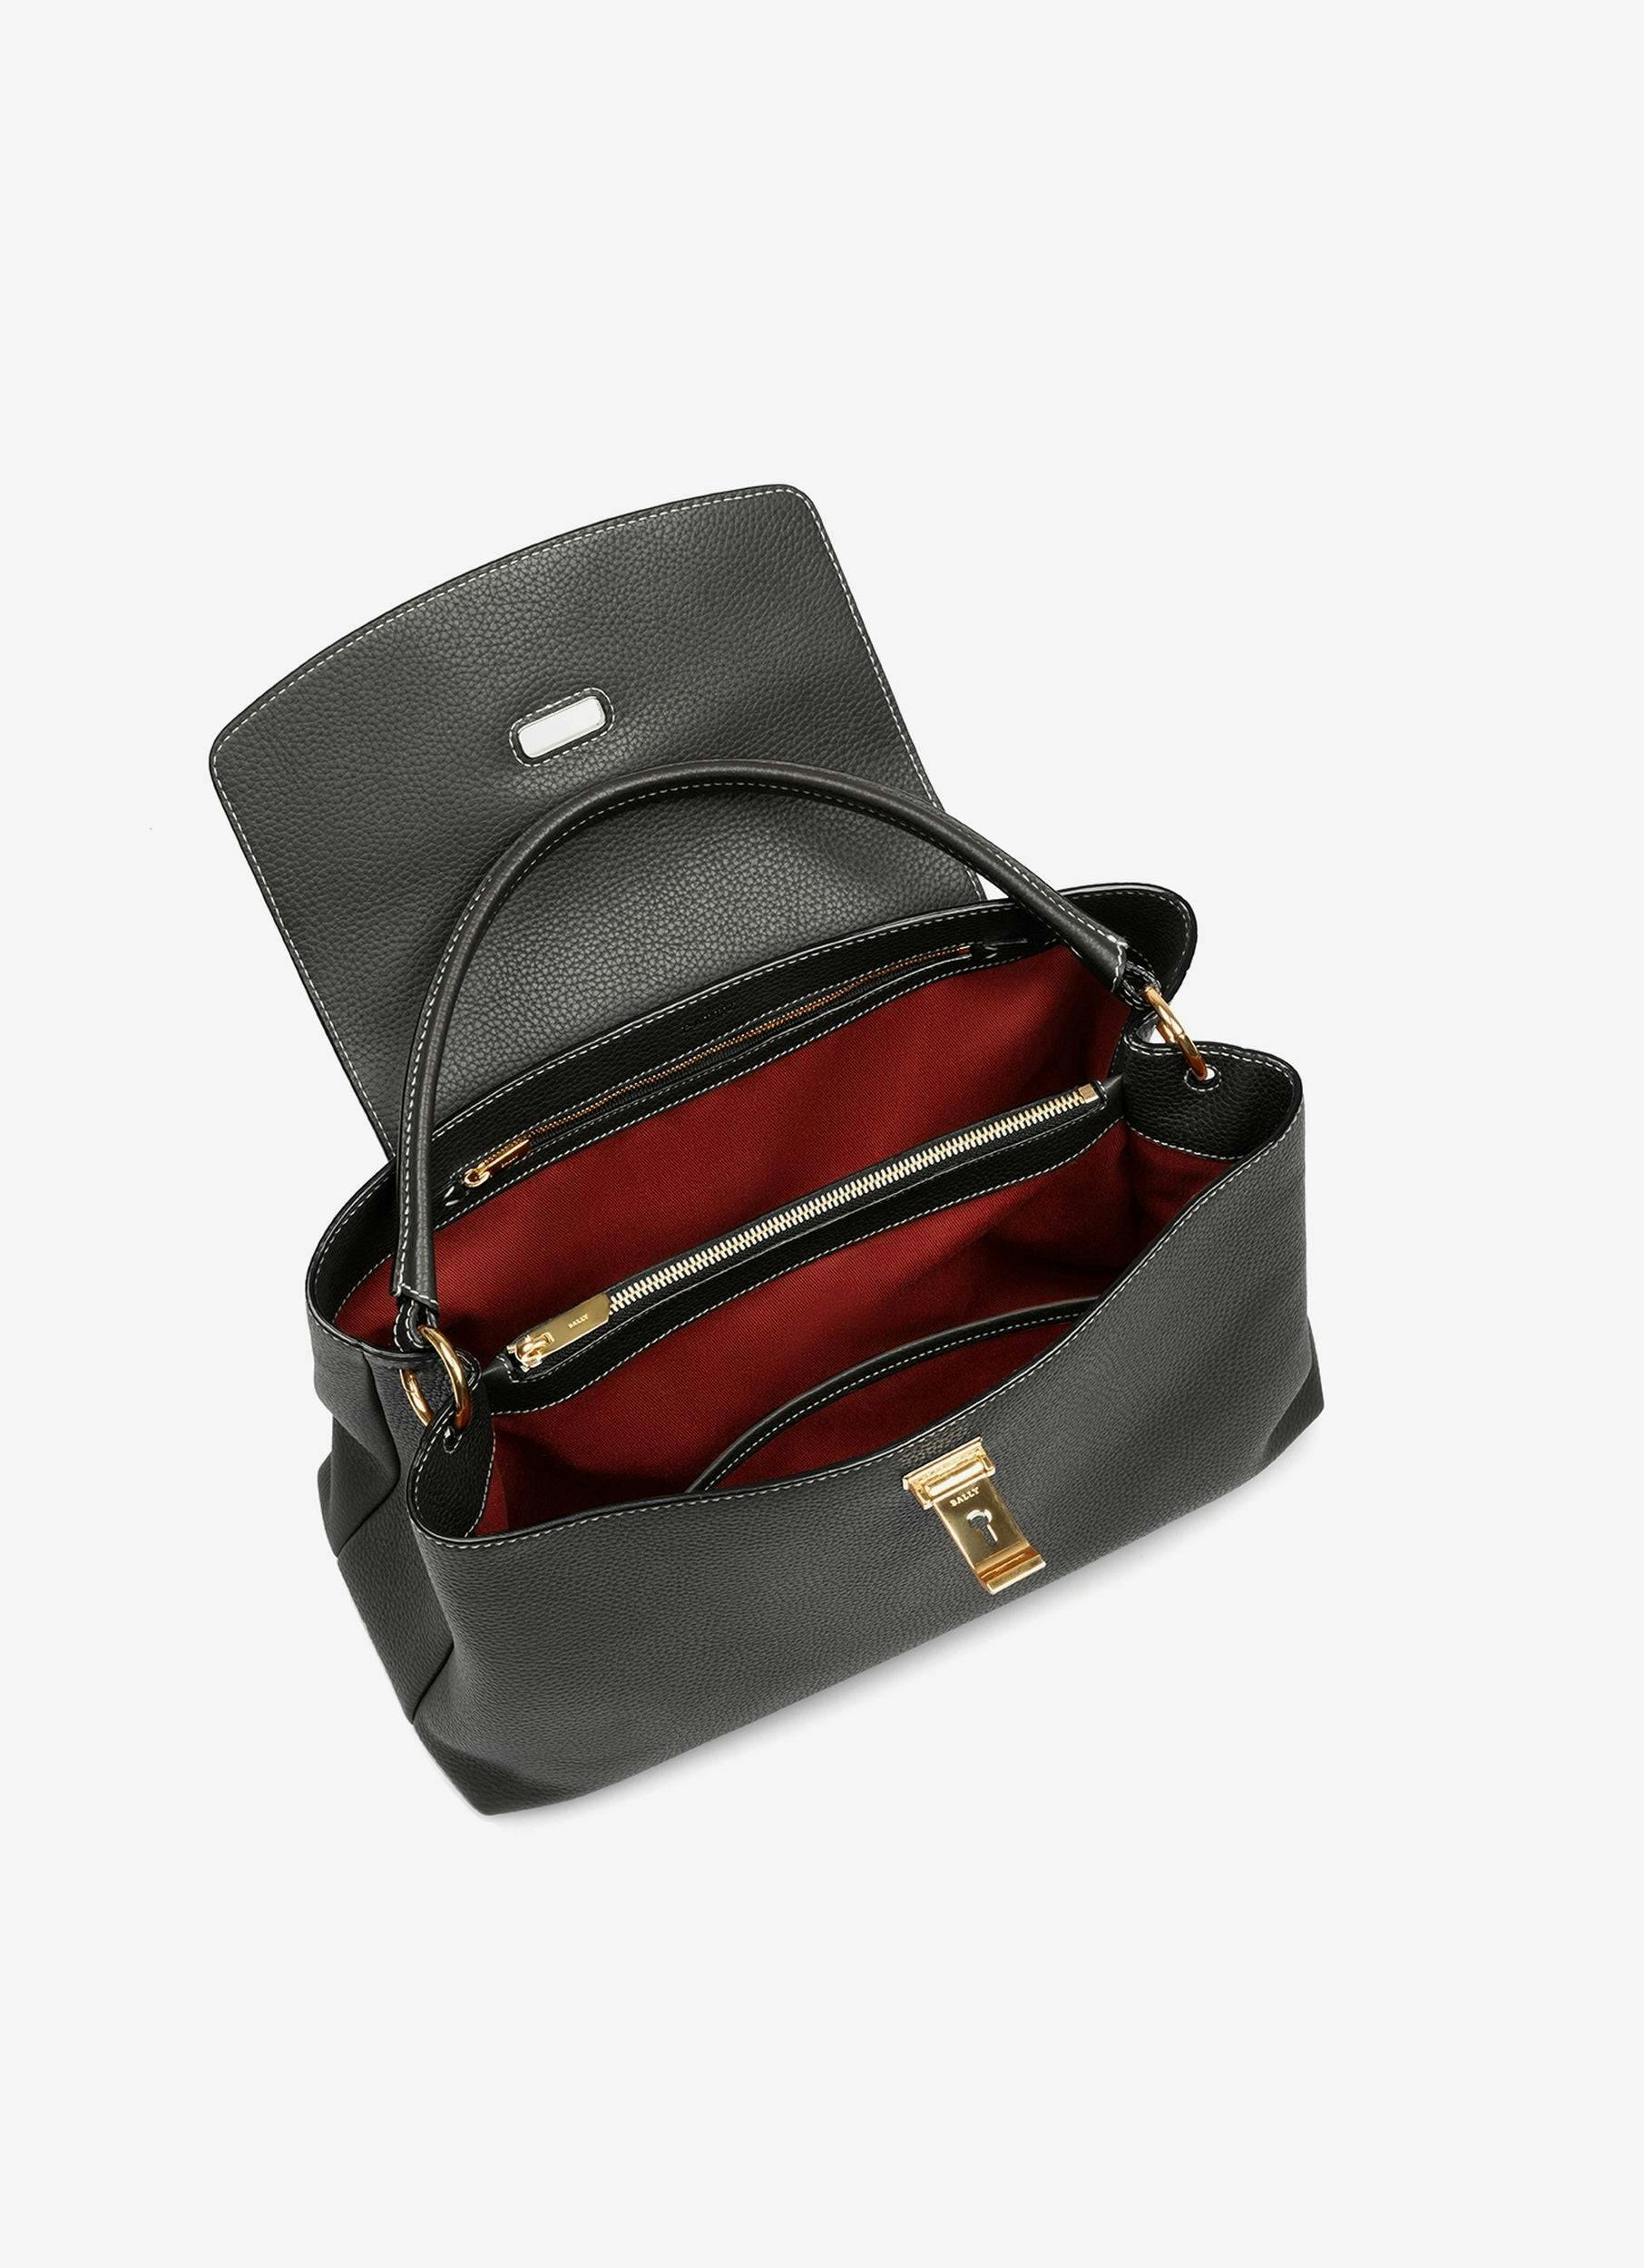 Women's Lock Me Top Handle Bag In Black Leather | Bally | Still Life Open / Inside